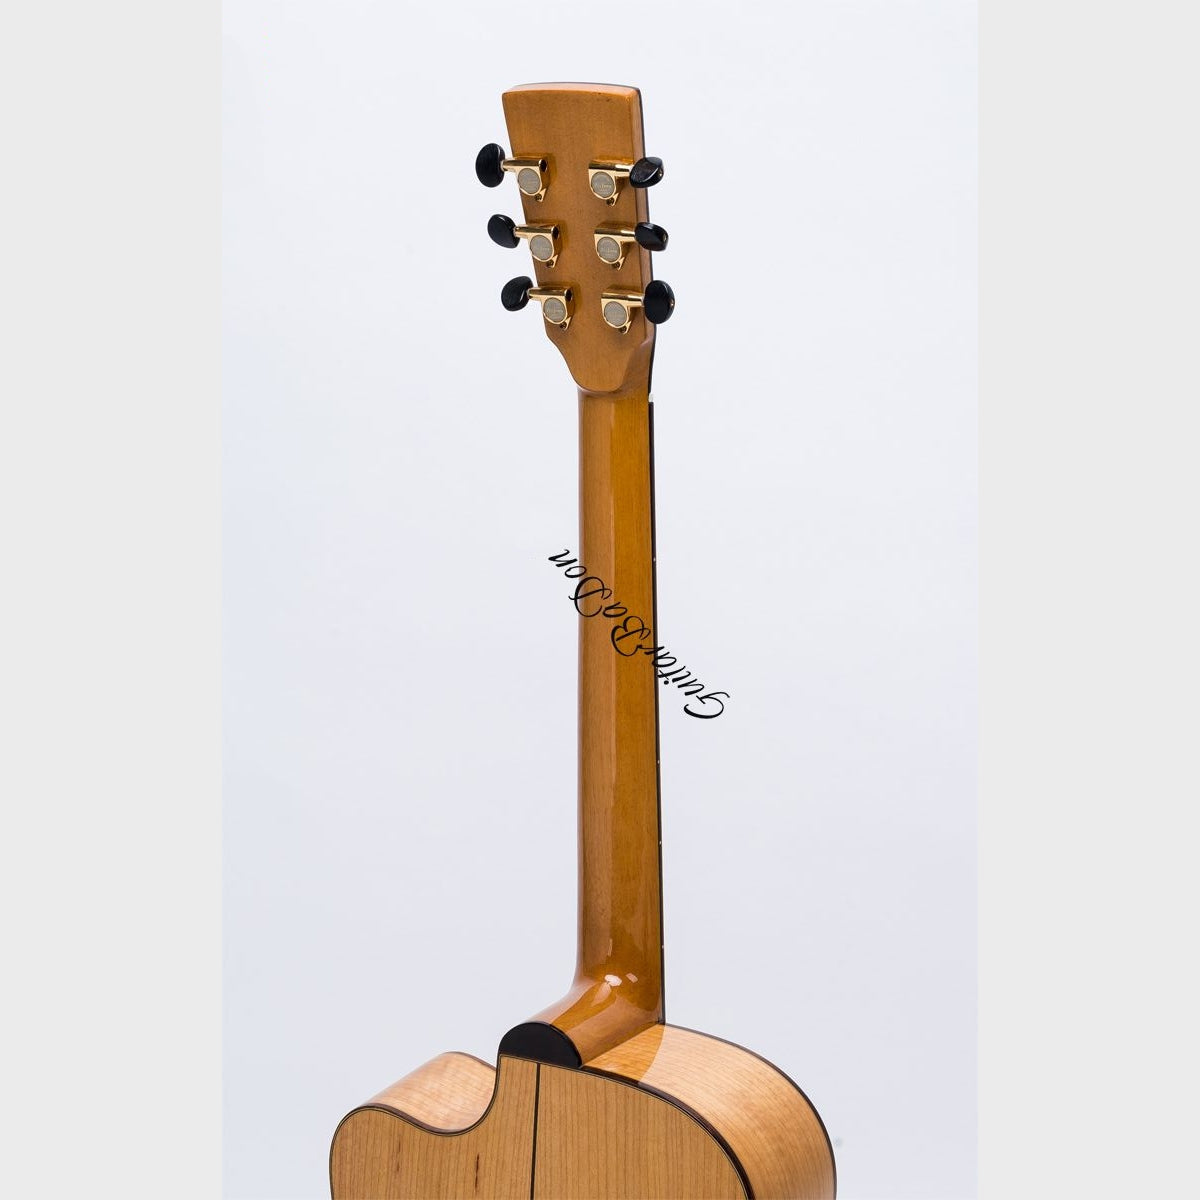 Đàn Guitar Acoustic Ba Đờn J550C